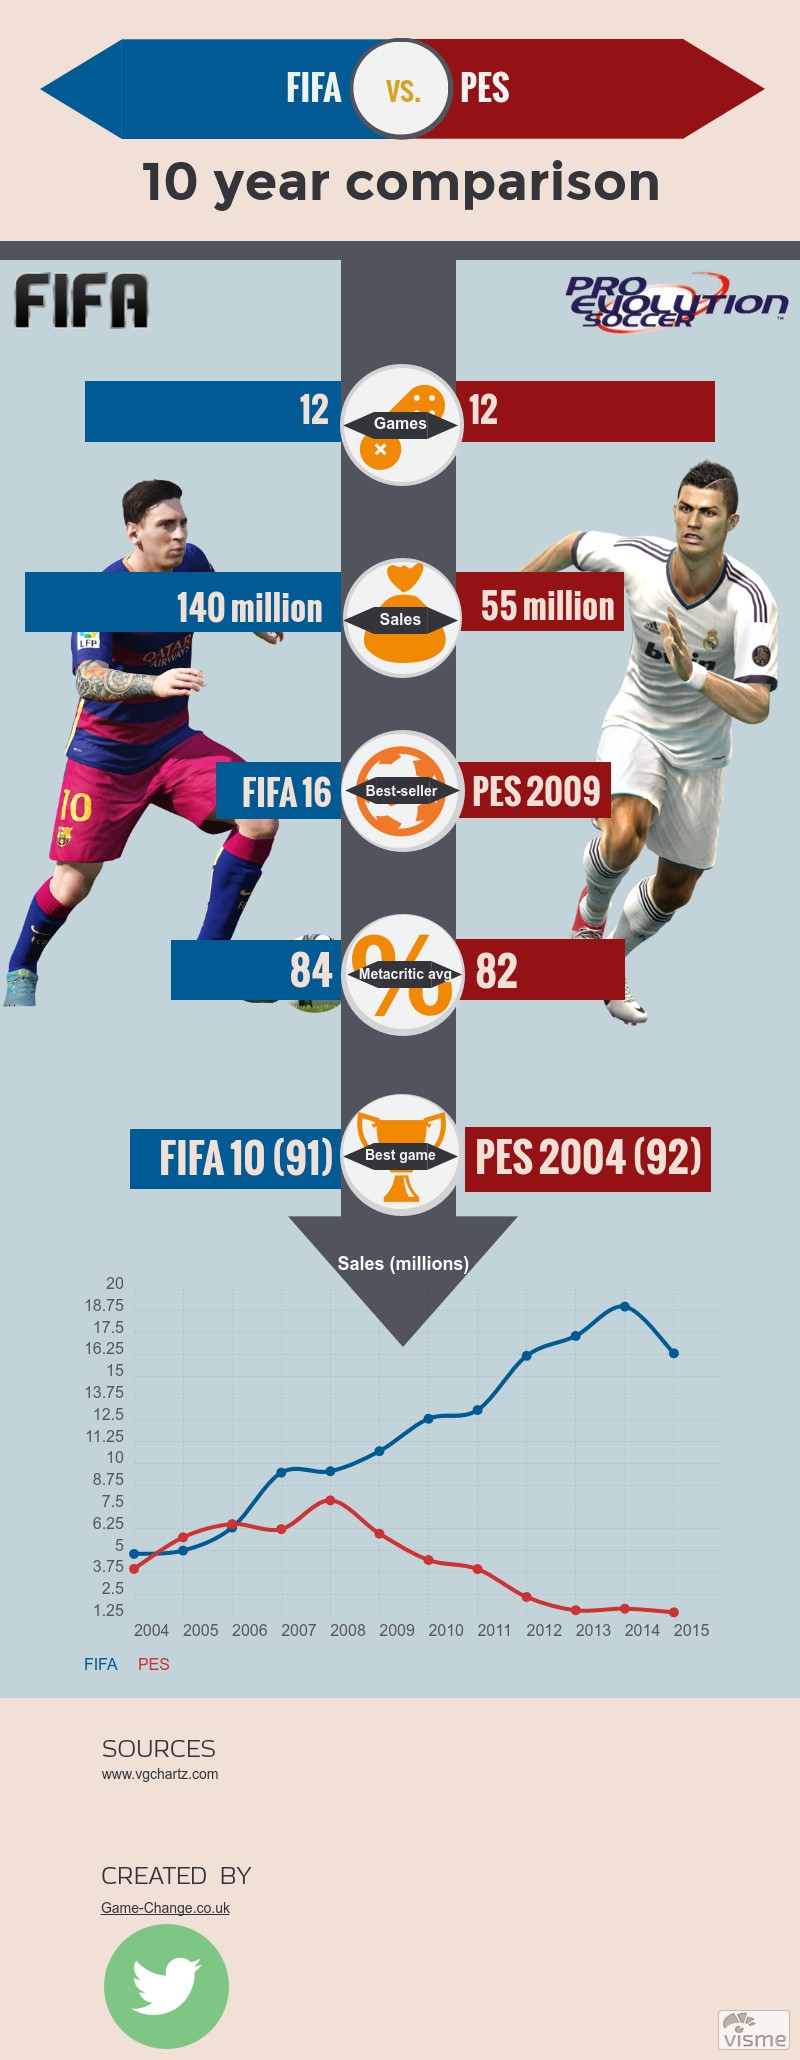 FIFA vs PES